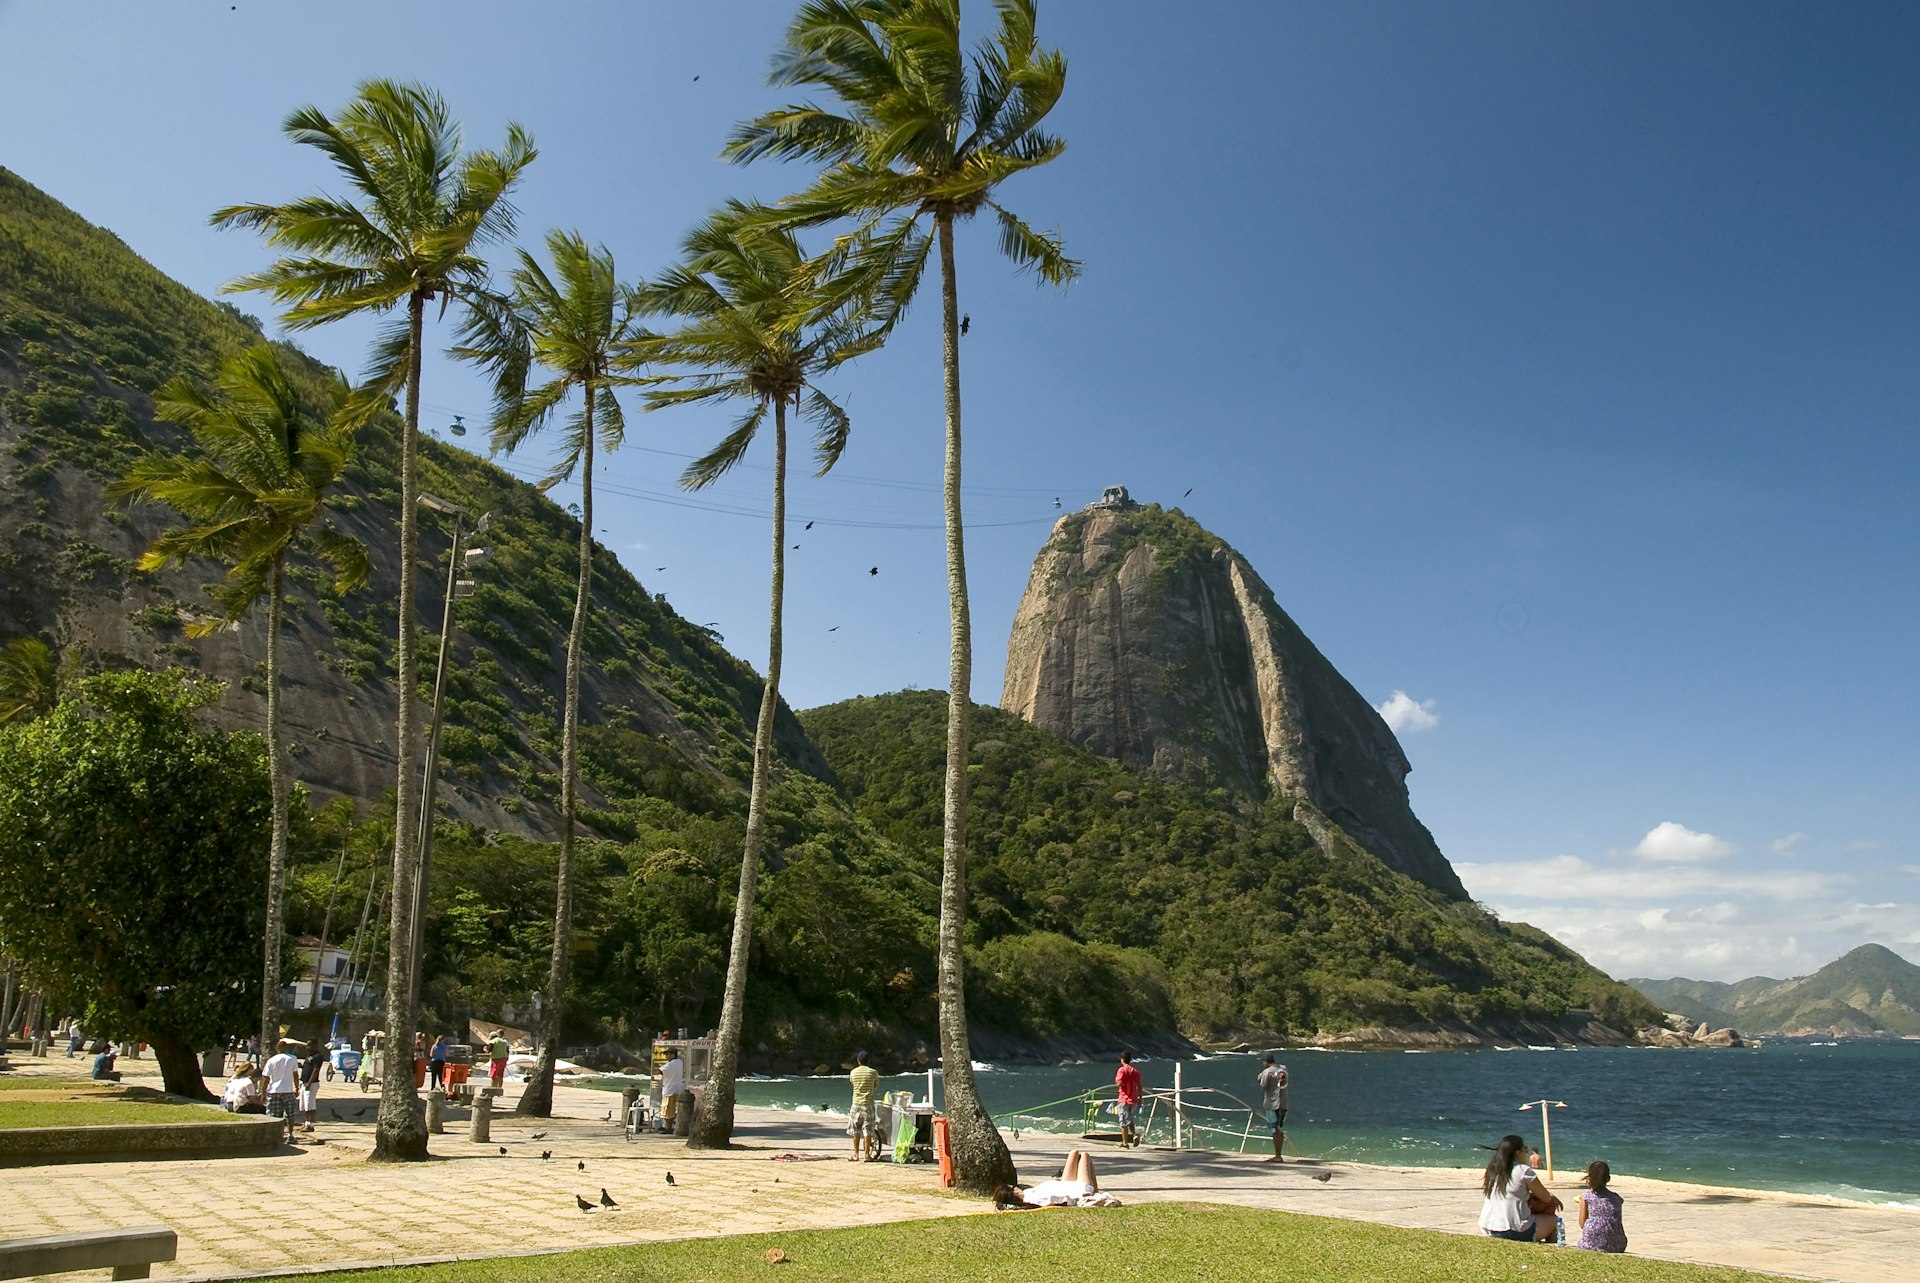 A view of Sugarloaf Mountain overlooking Praia Vermelha